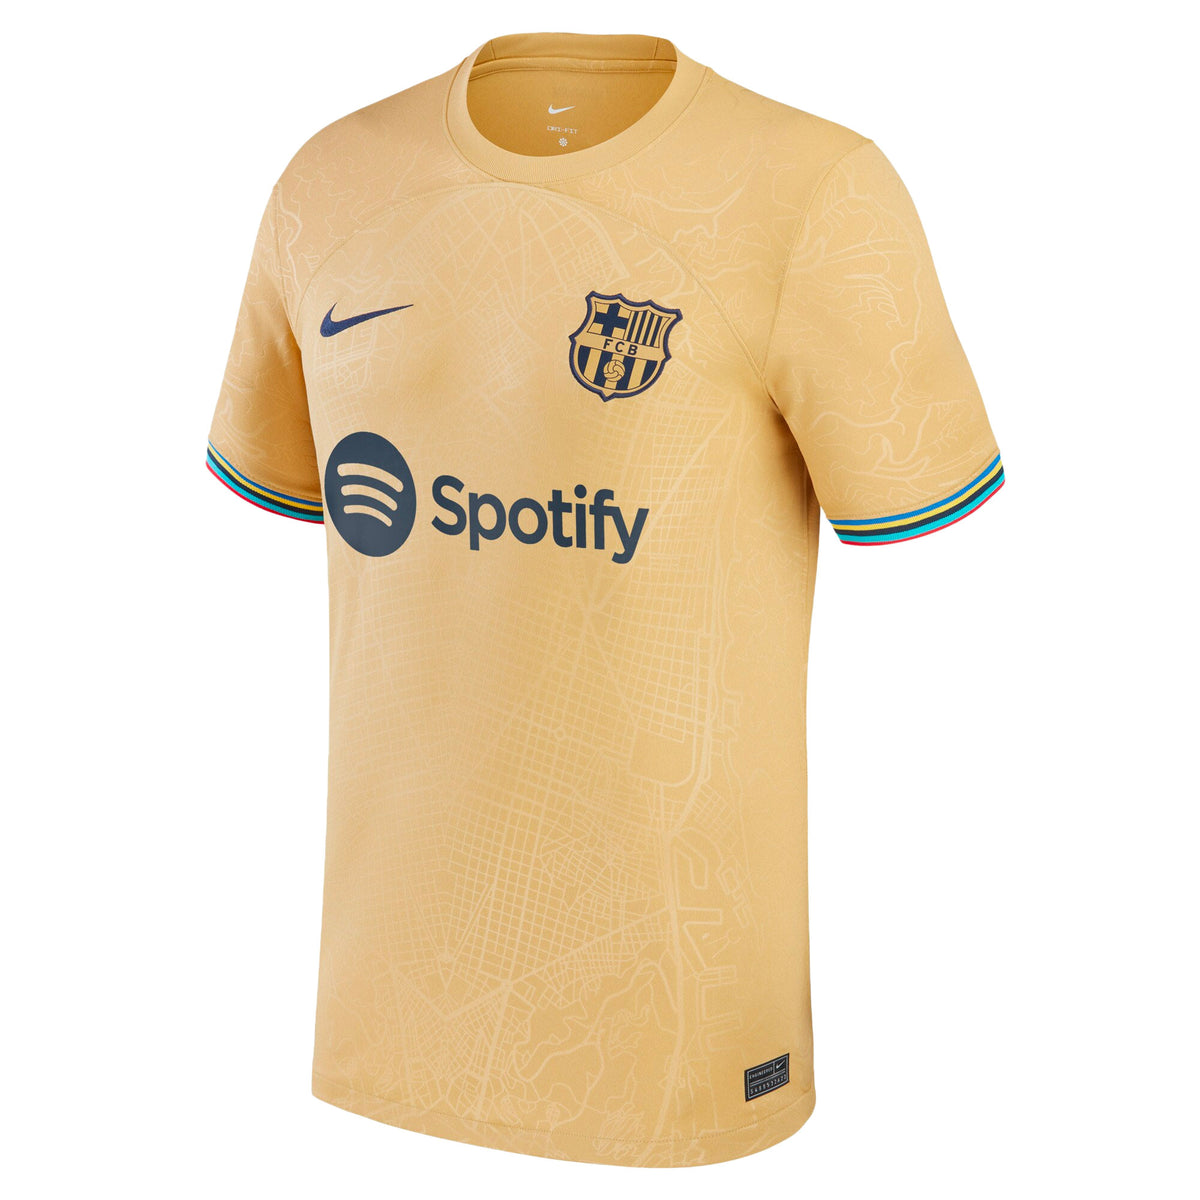 Oh My Goal - Nike x Supreme Football Kit for FC Barcelona